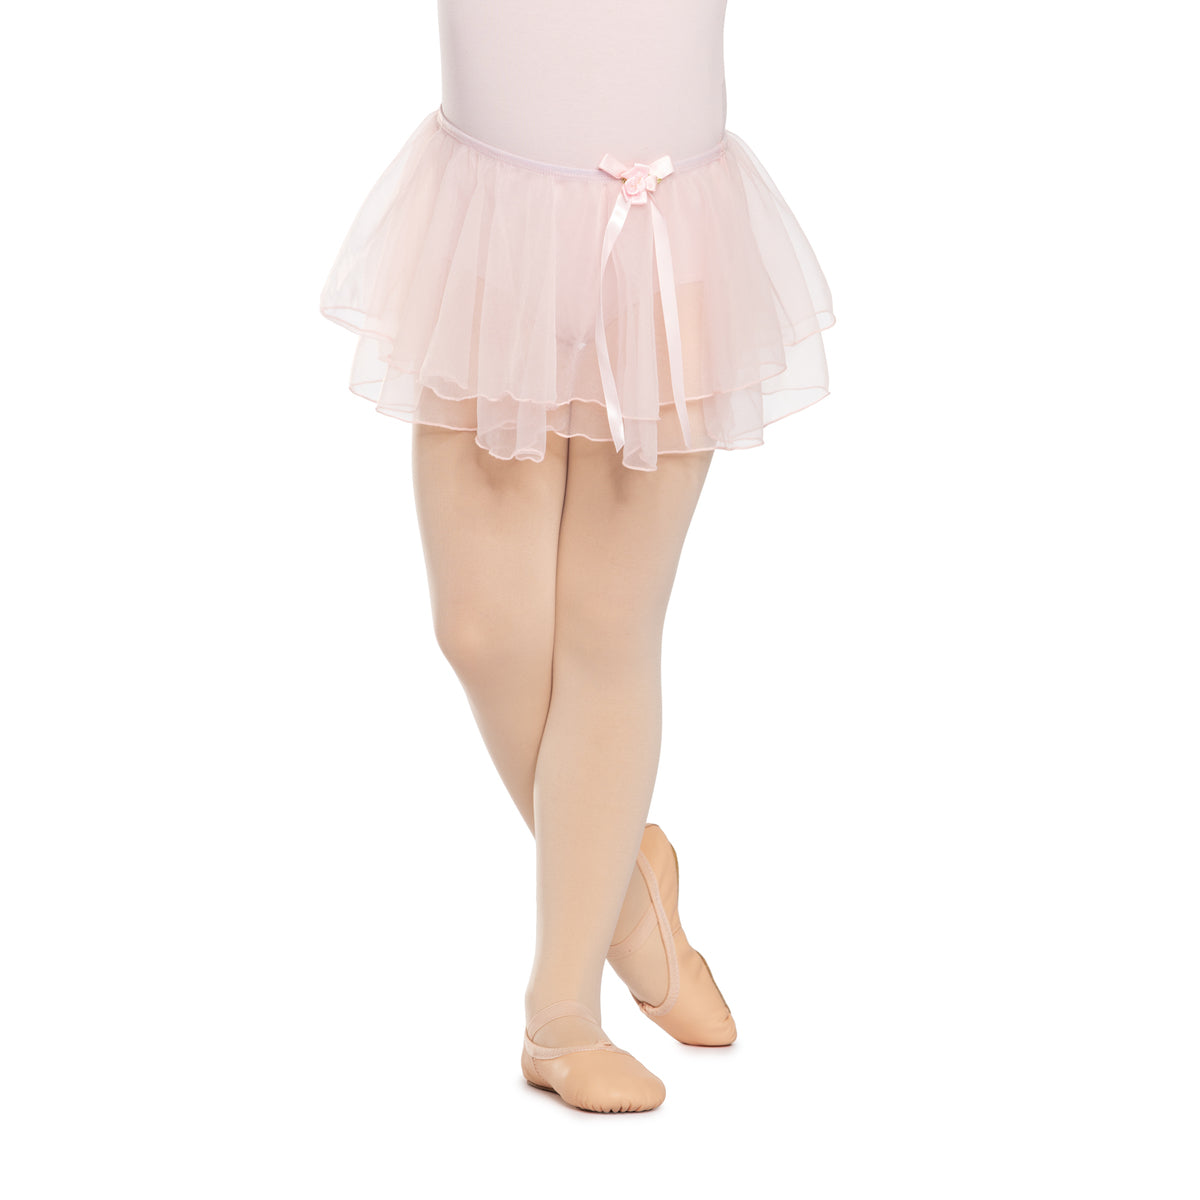 Buy online high quality Revolution Girl's Ballet Skirt - The Movement Boutique - Kelowna